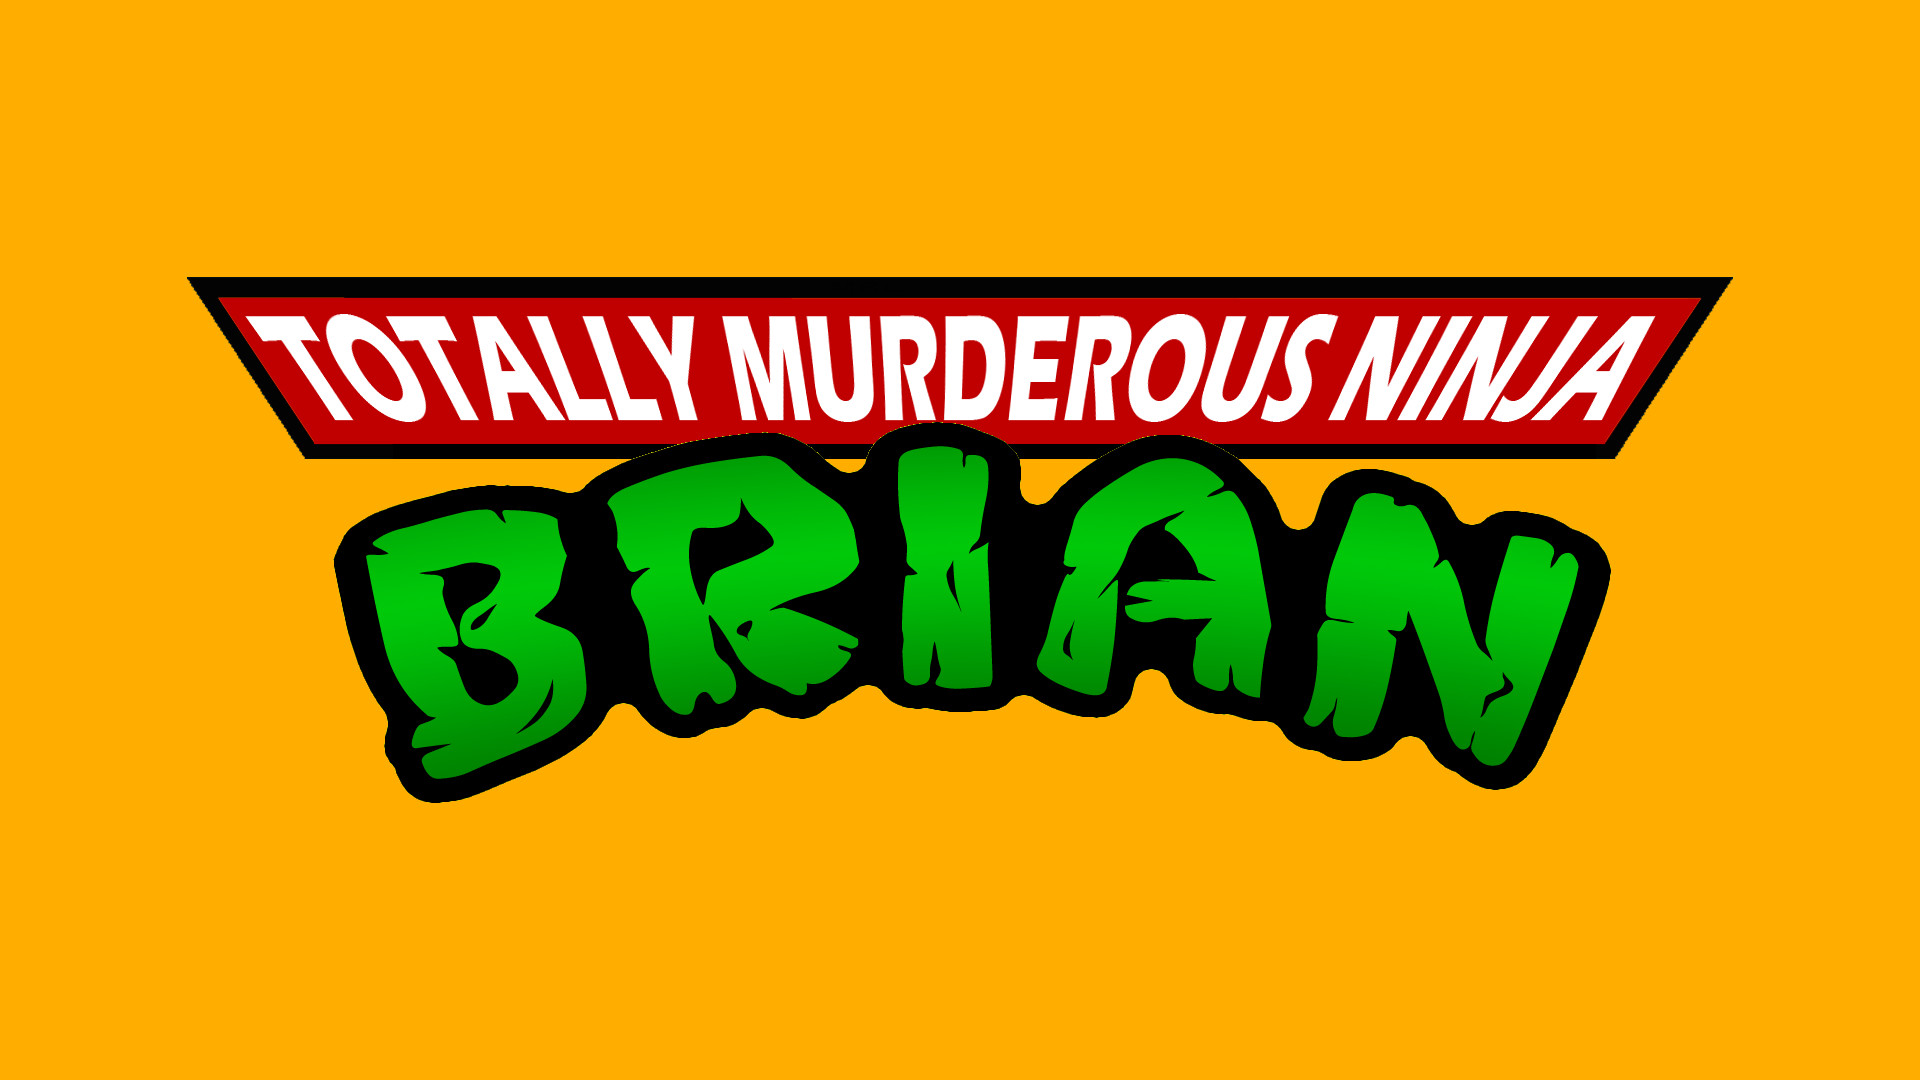 1920x1080 Totally Murderous Ninja Brian wallpaper : gamegrumps